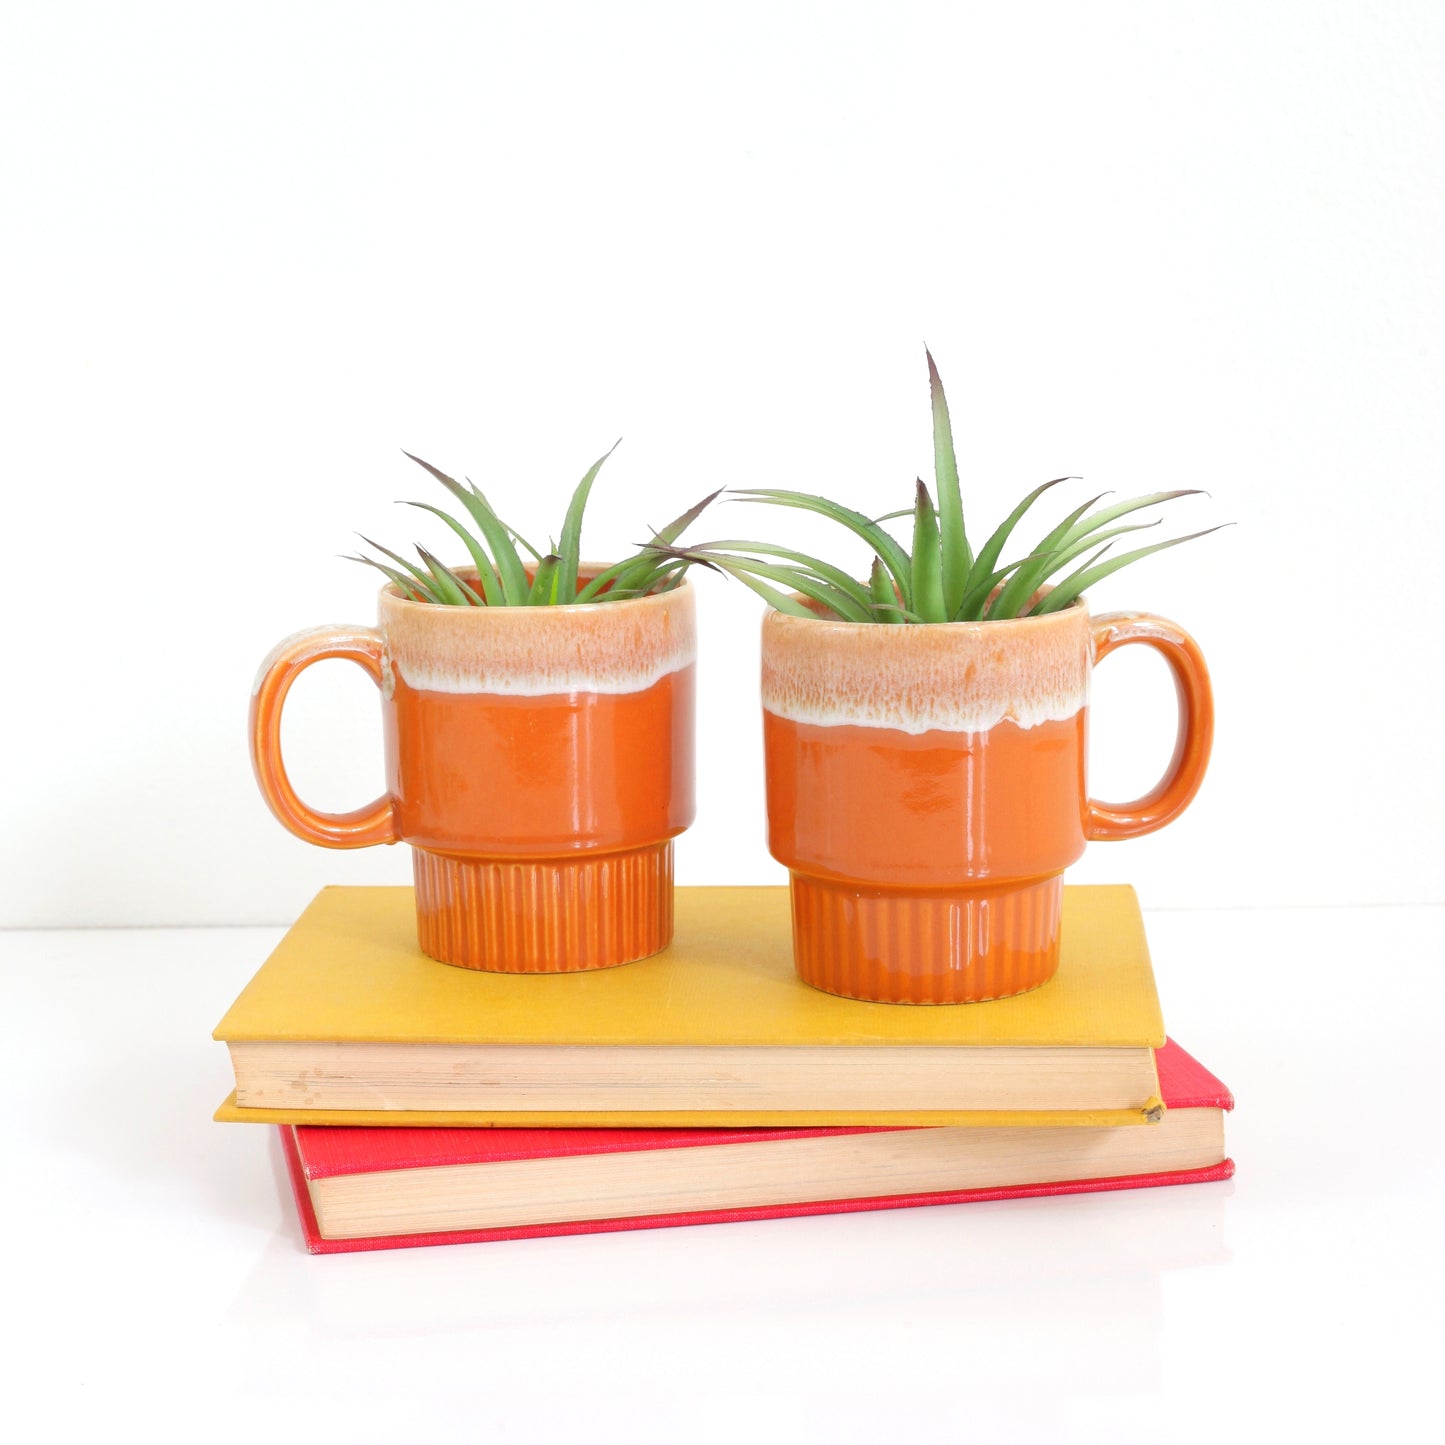 SOLD - Vintage Orange Drip Glaze Stacking Mugs from Japan